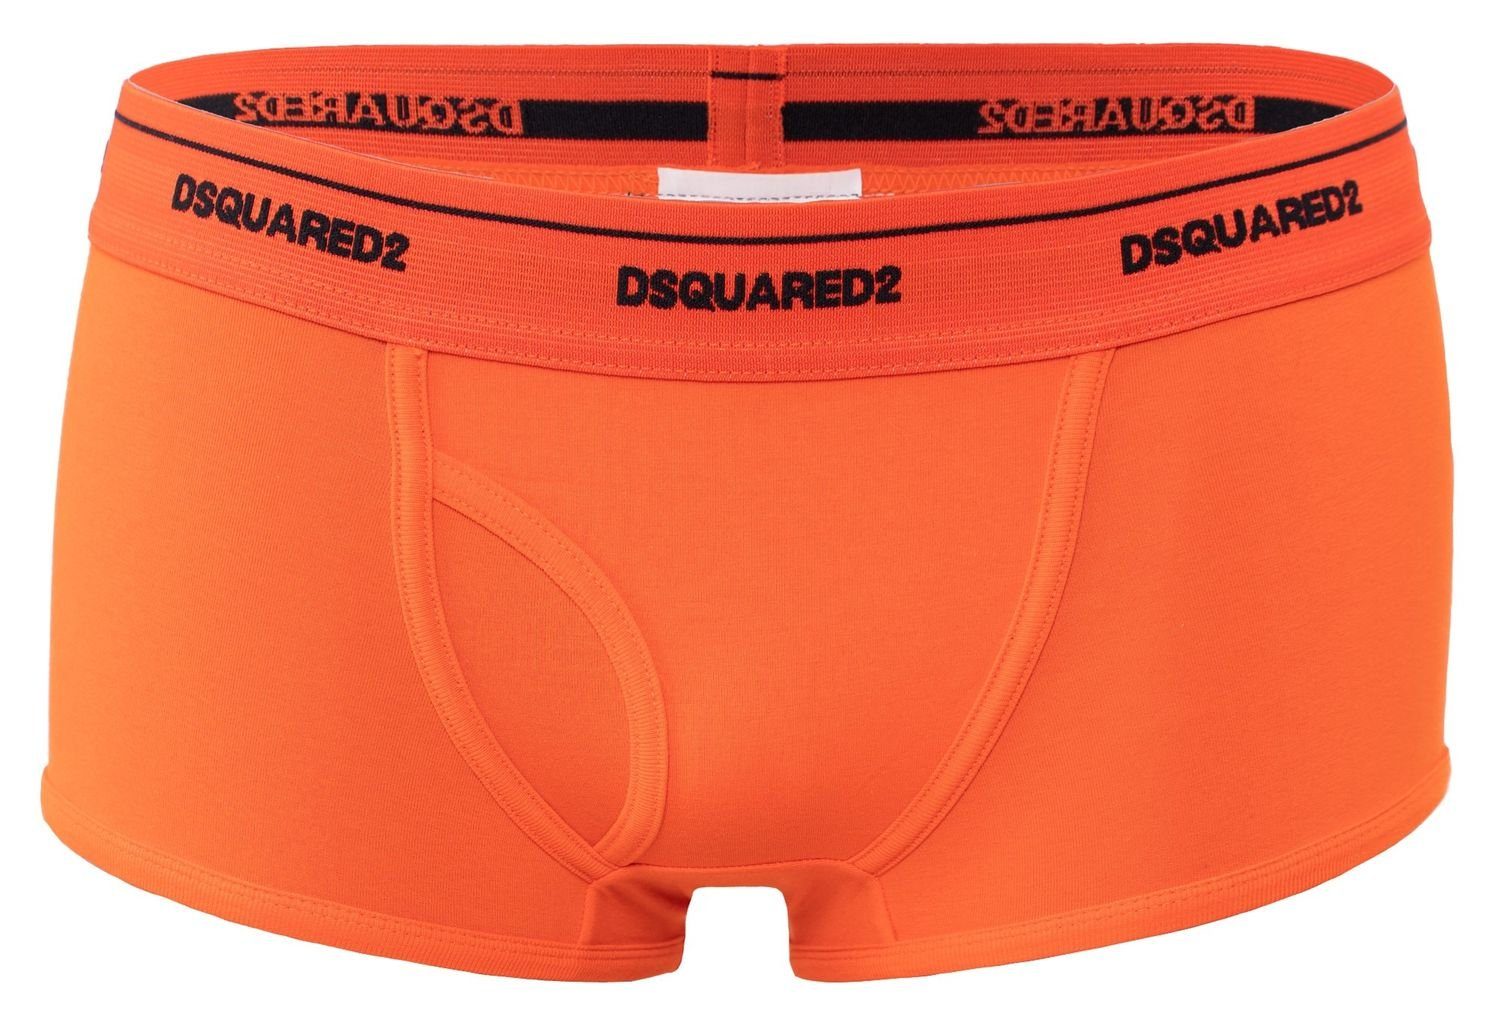 Dsquared2 Trunk »Dsquared2 Boxershorts / Pants / Shorts / Boxer in rot Größe  S / M / L / XL / XXL« (1 St) online kaufen | OTTO